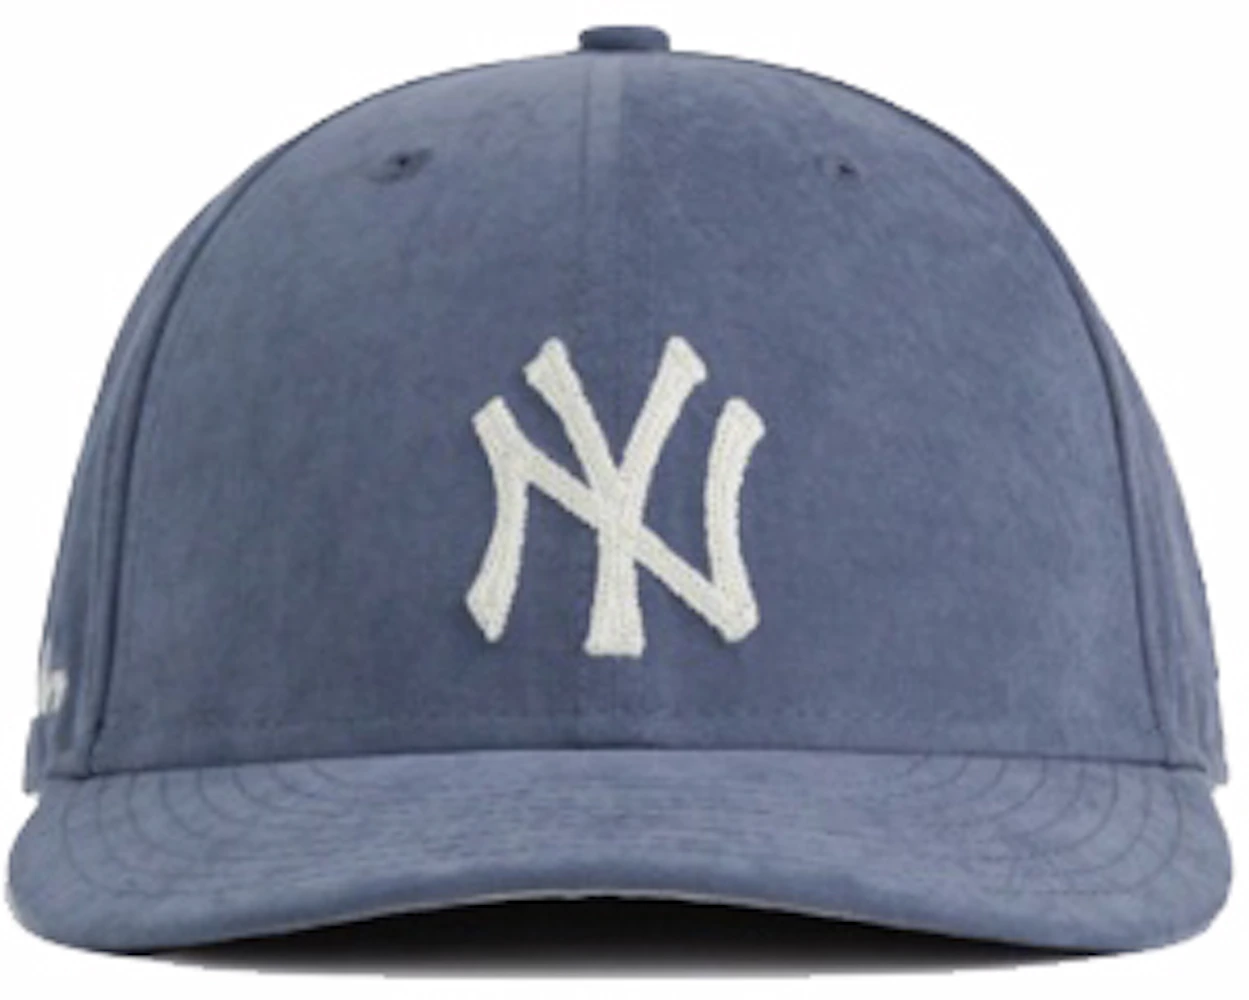 Aime Leon Dore Newera 22AW Newyork Mets Blue Beret Hat Cap One